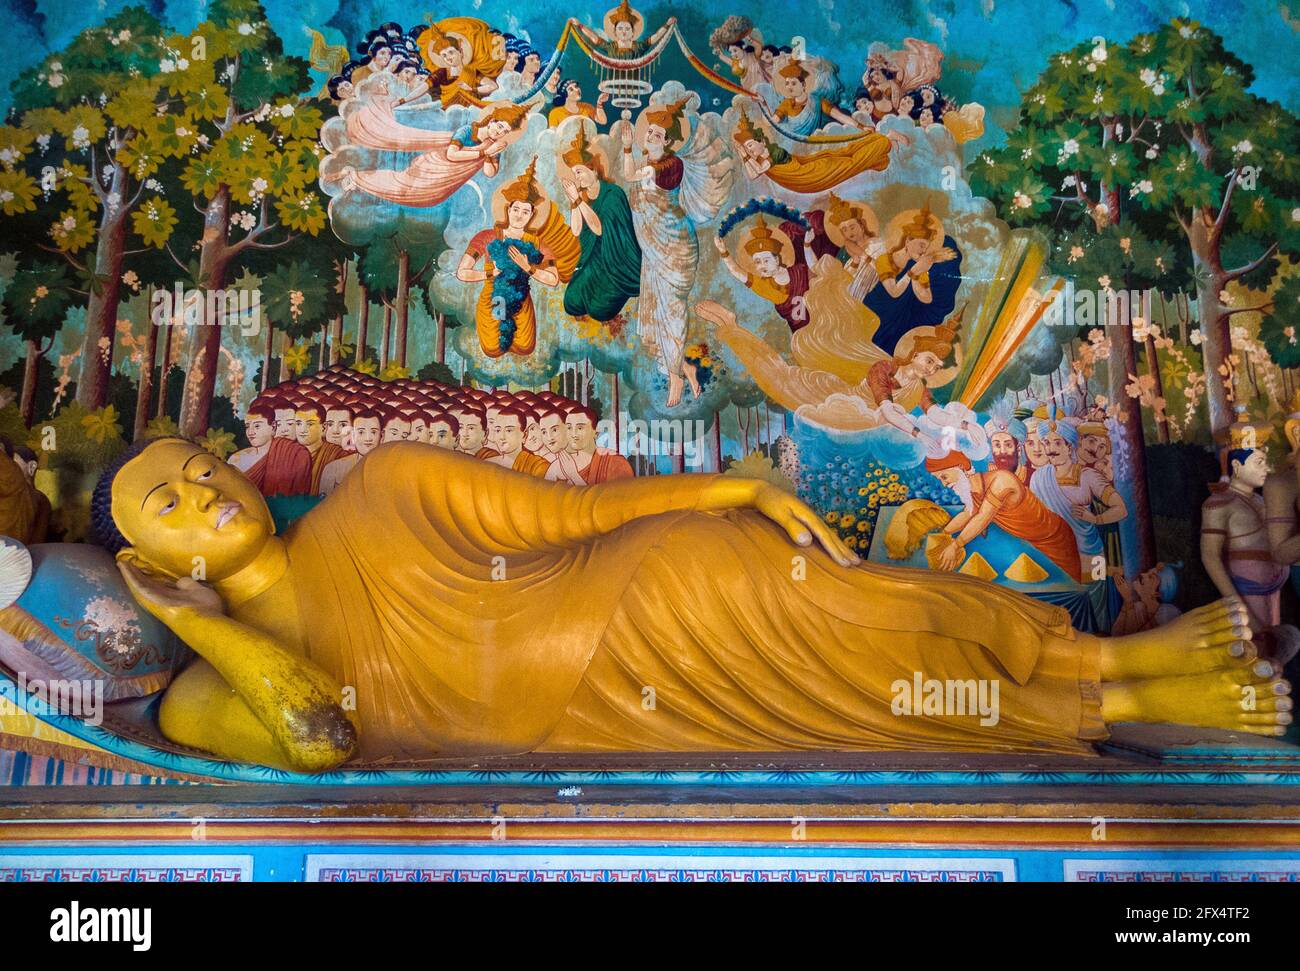 Dikwella, Wewurukannala Vihara Temple, Sri Lanka: interior room with statue of reclining Buddha with a fresco behind Stock Photo